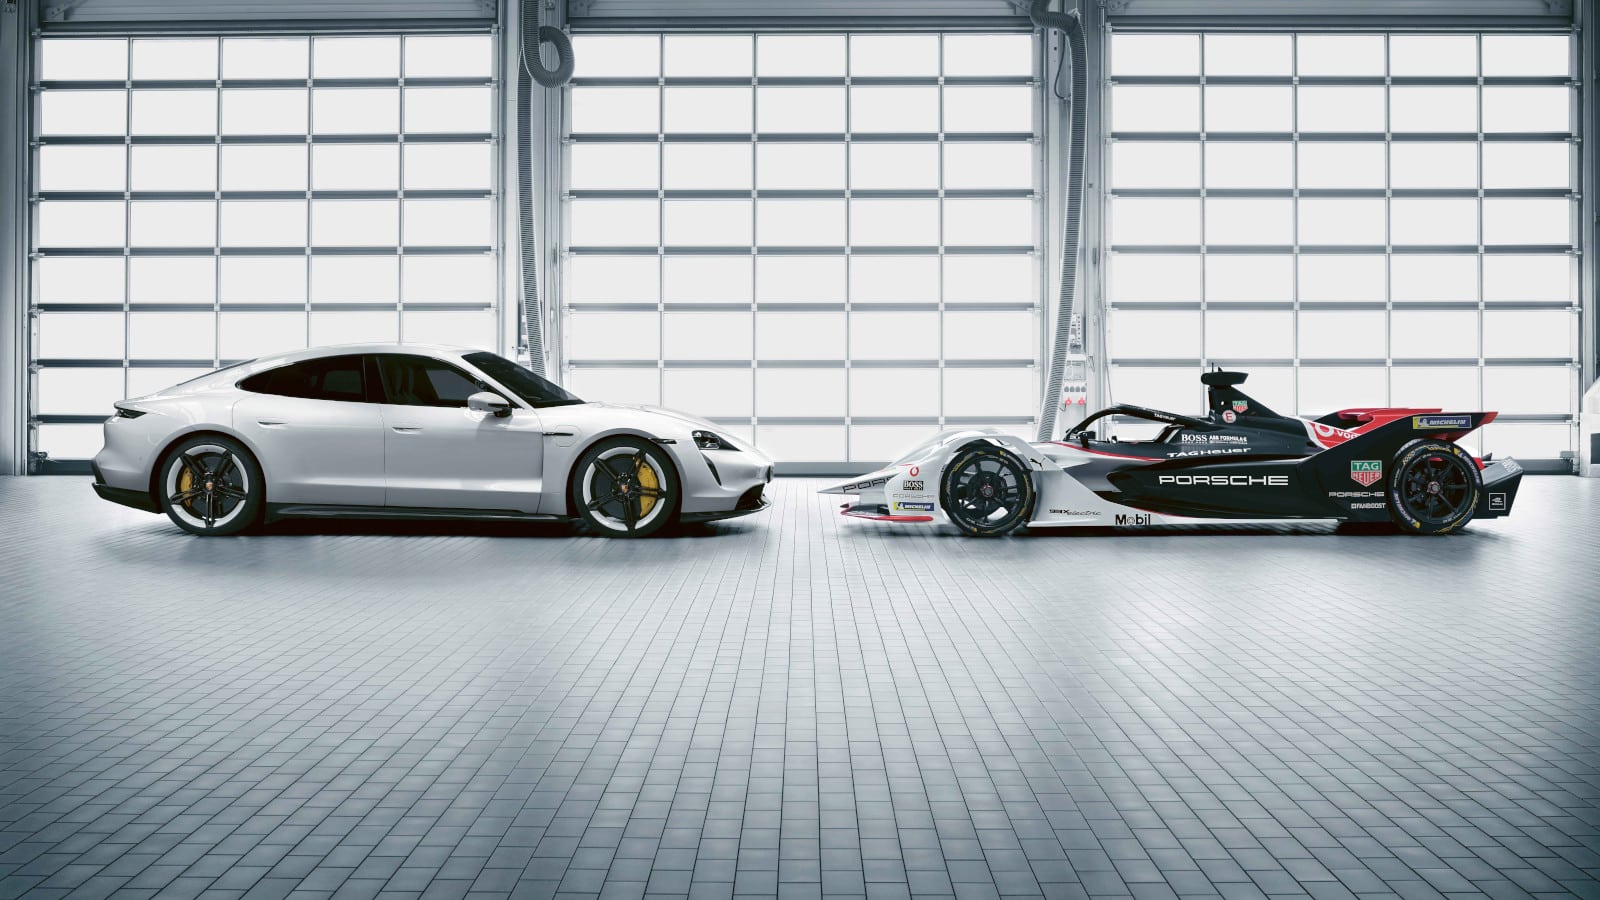 De la Fórmula E a las calles, la innovación de Porsche